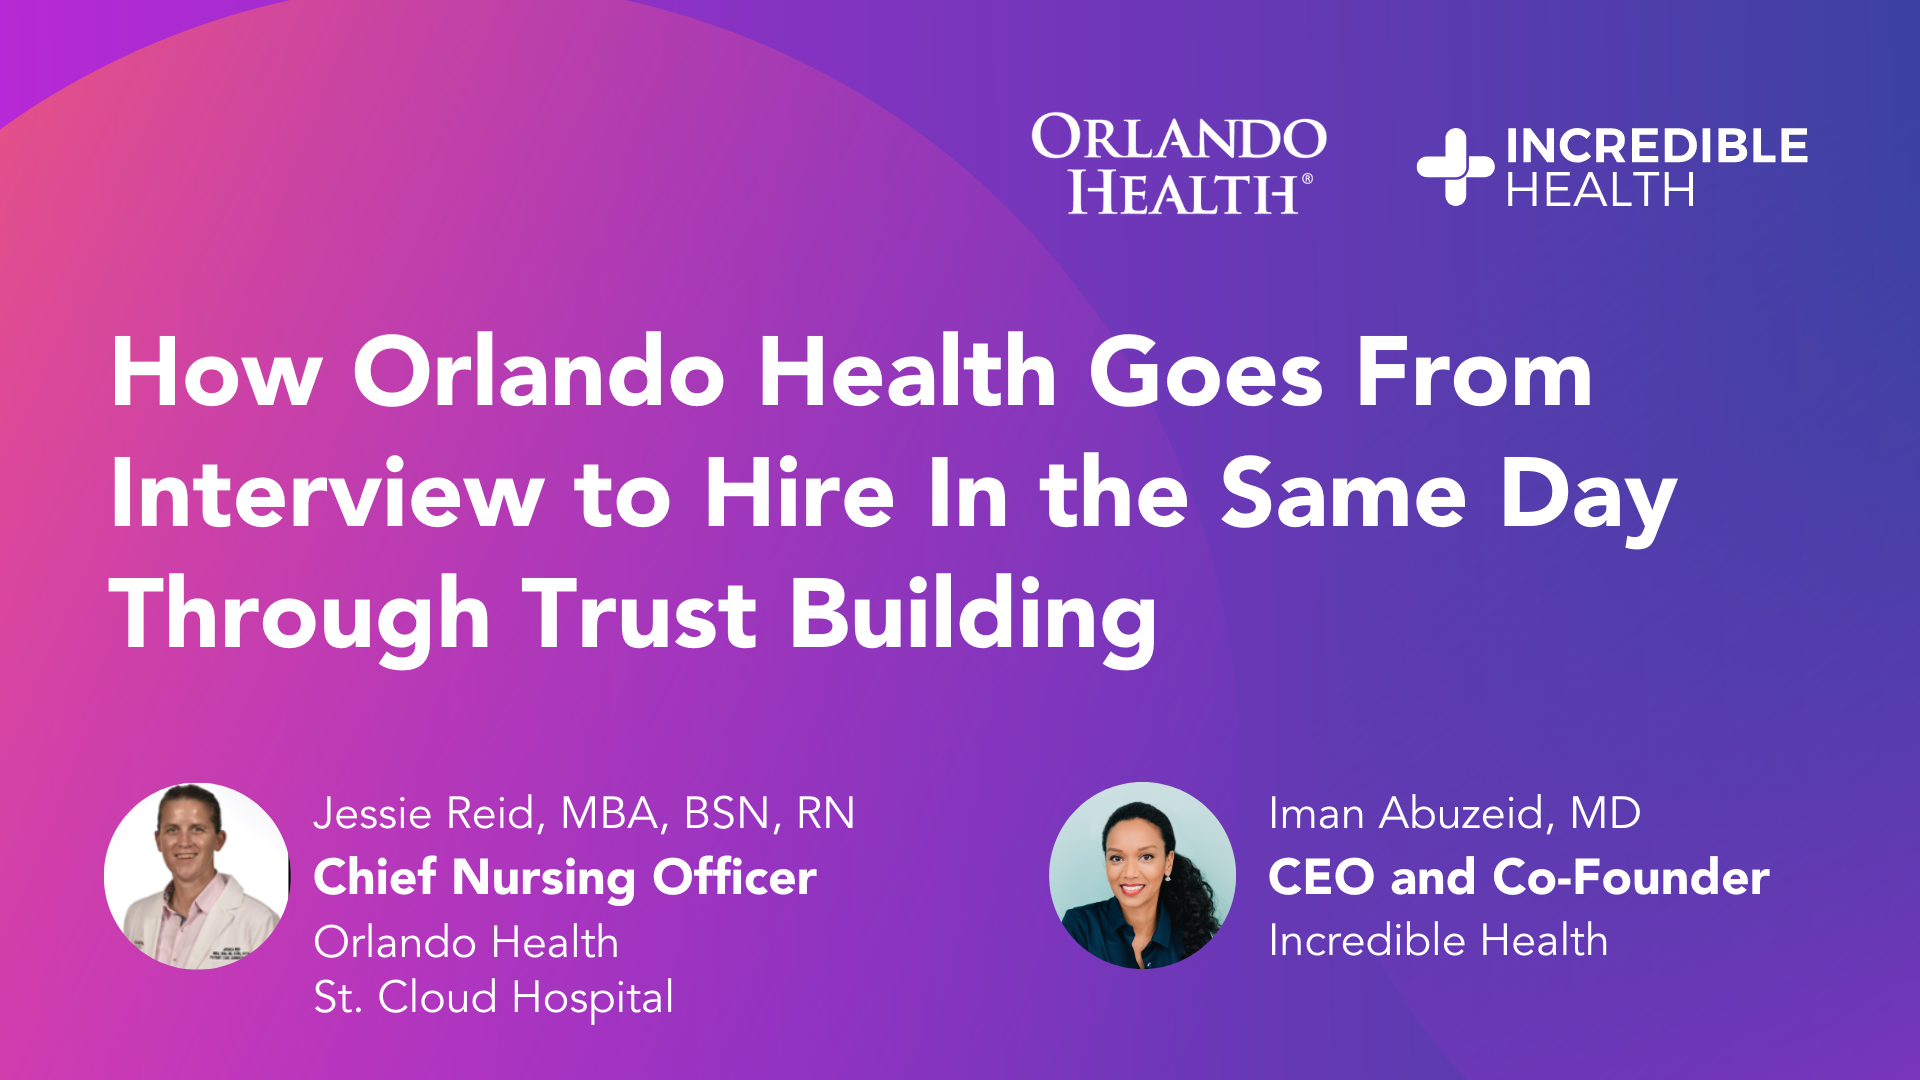 Orlando Health St. Cloud Hospital